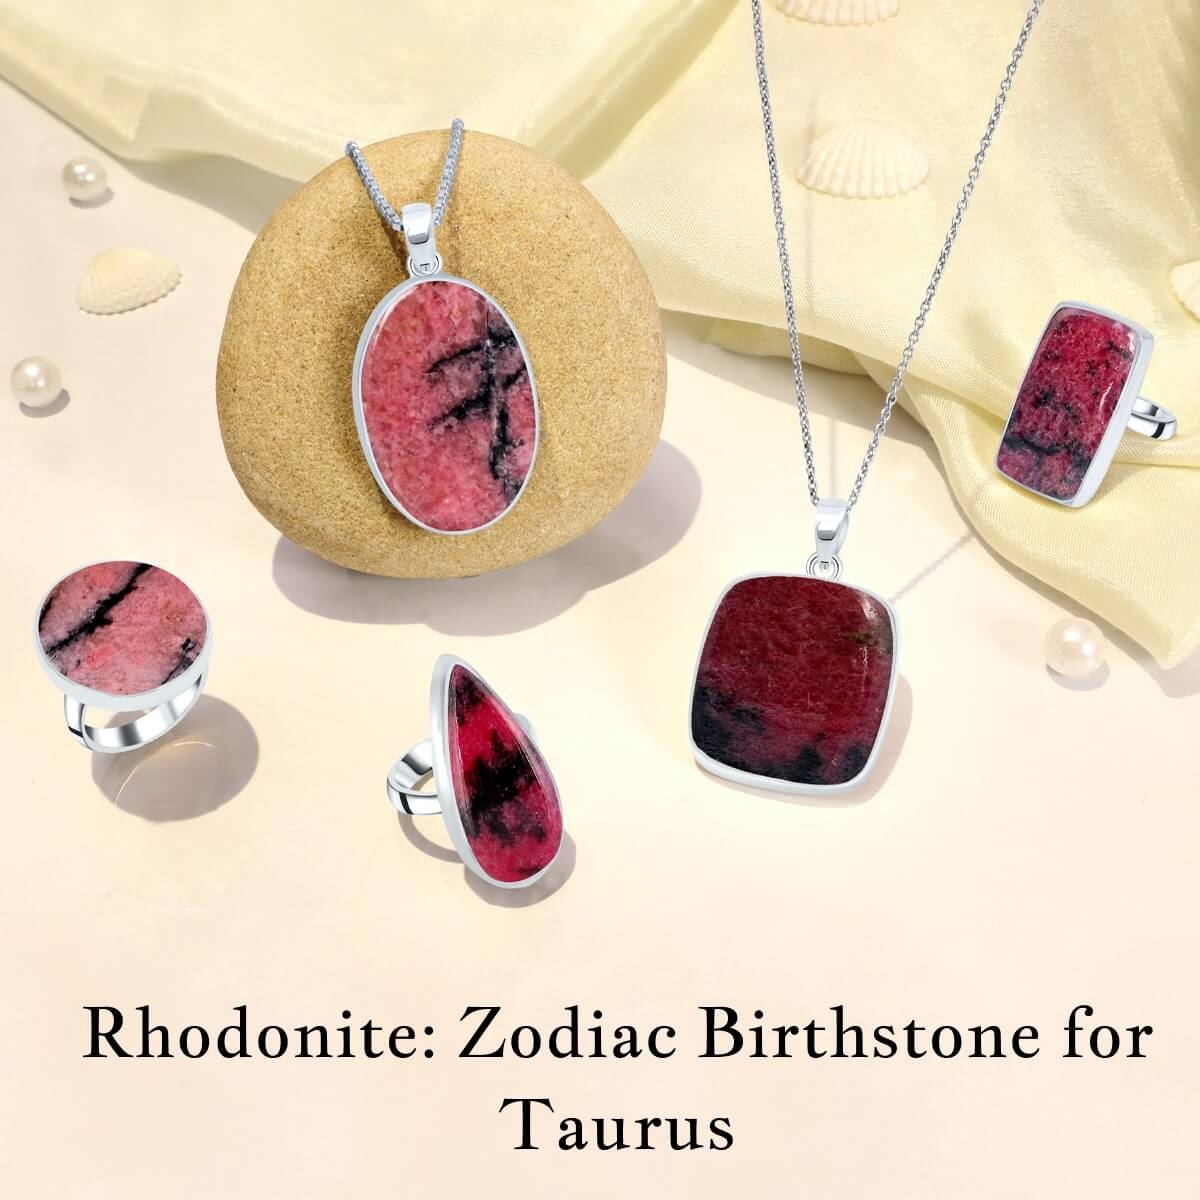 Rhodonite is The Zodiac Birthstone For Taureans